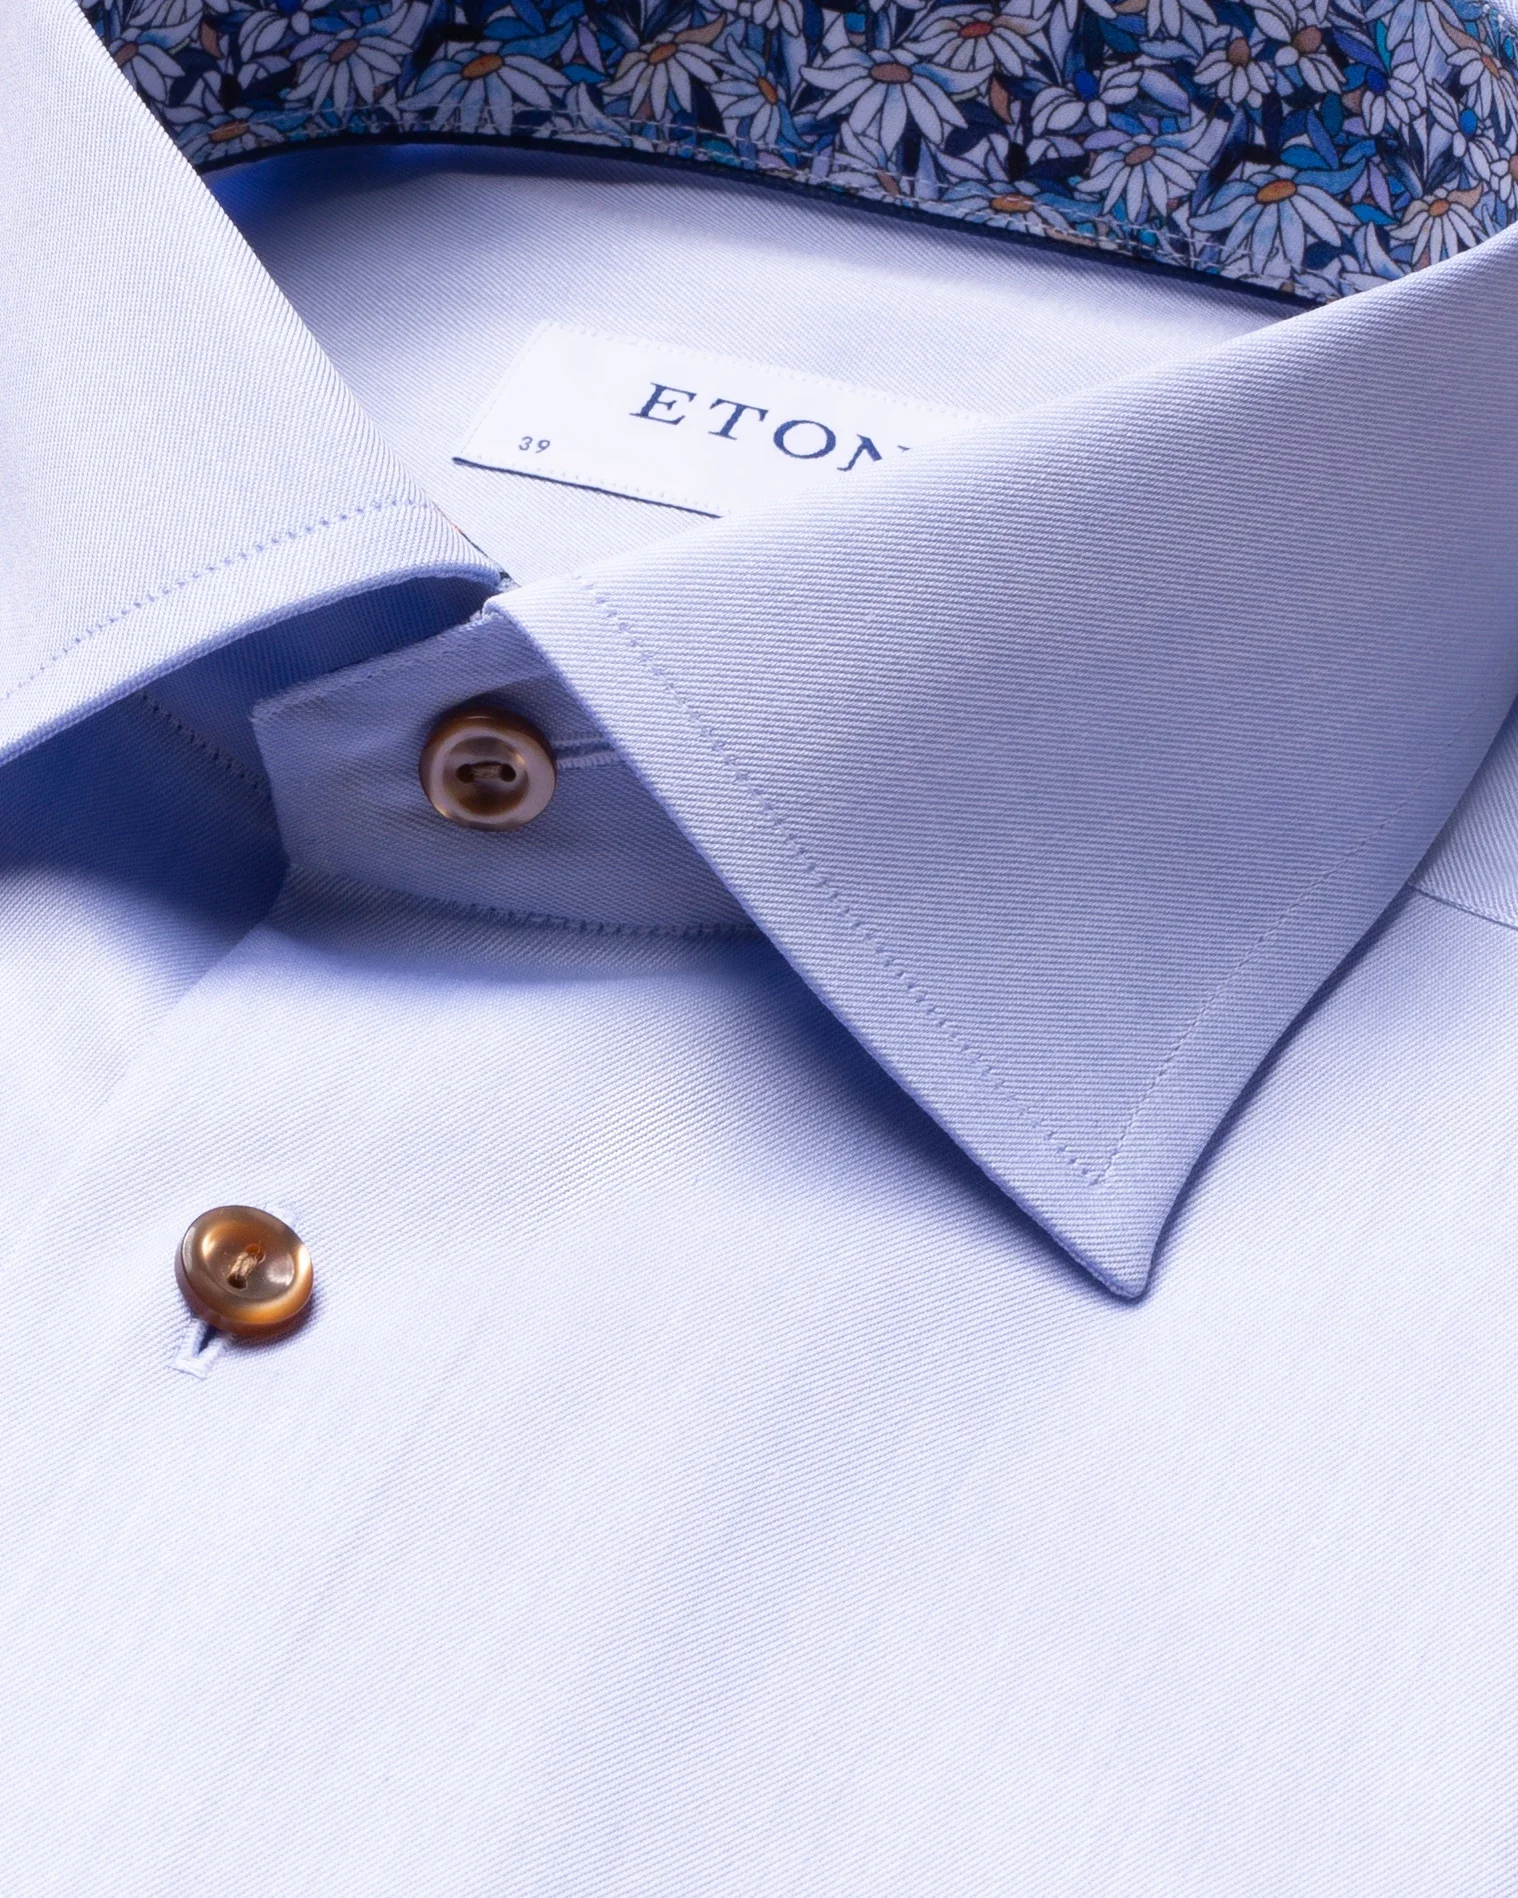 Eton - light blue signature twill shirt printed details